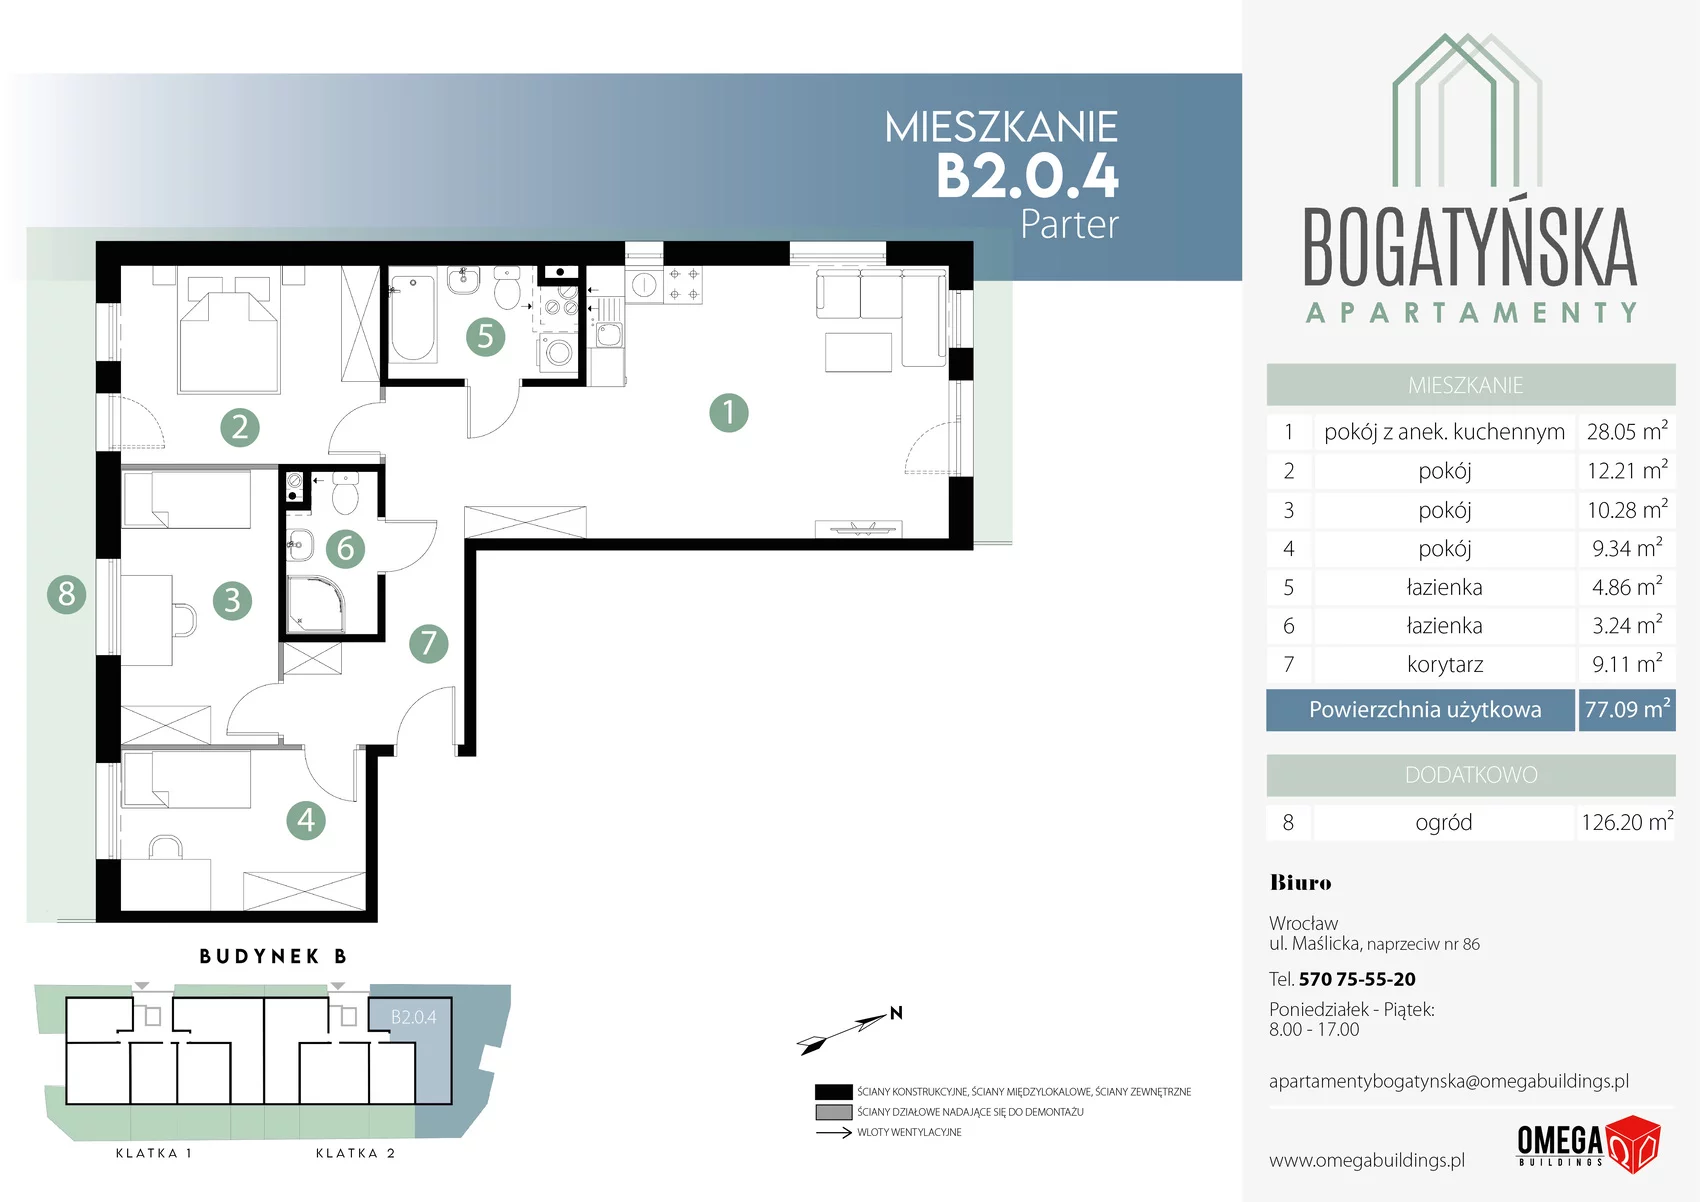 Apartament 77,09 m², parter, oferta nr B2.0.4, Bogatyńska Apartamenty, Wrocław, Maślice, Fabryczna, ul. Bogatyńska